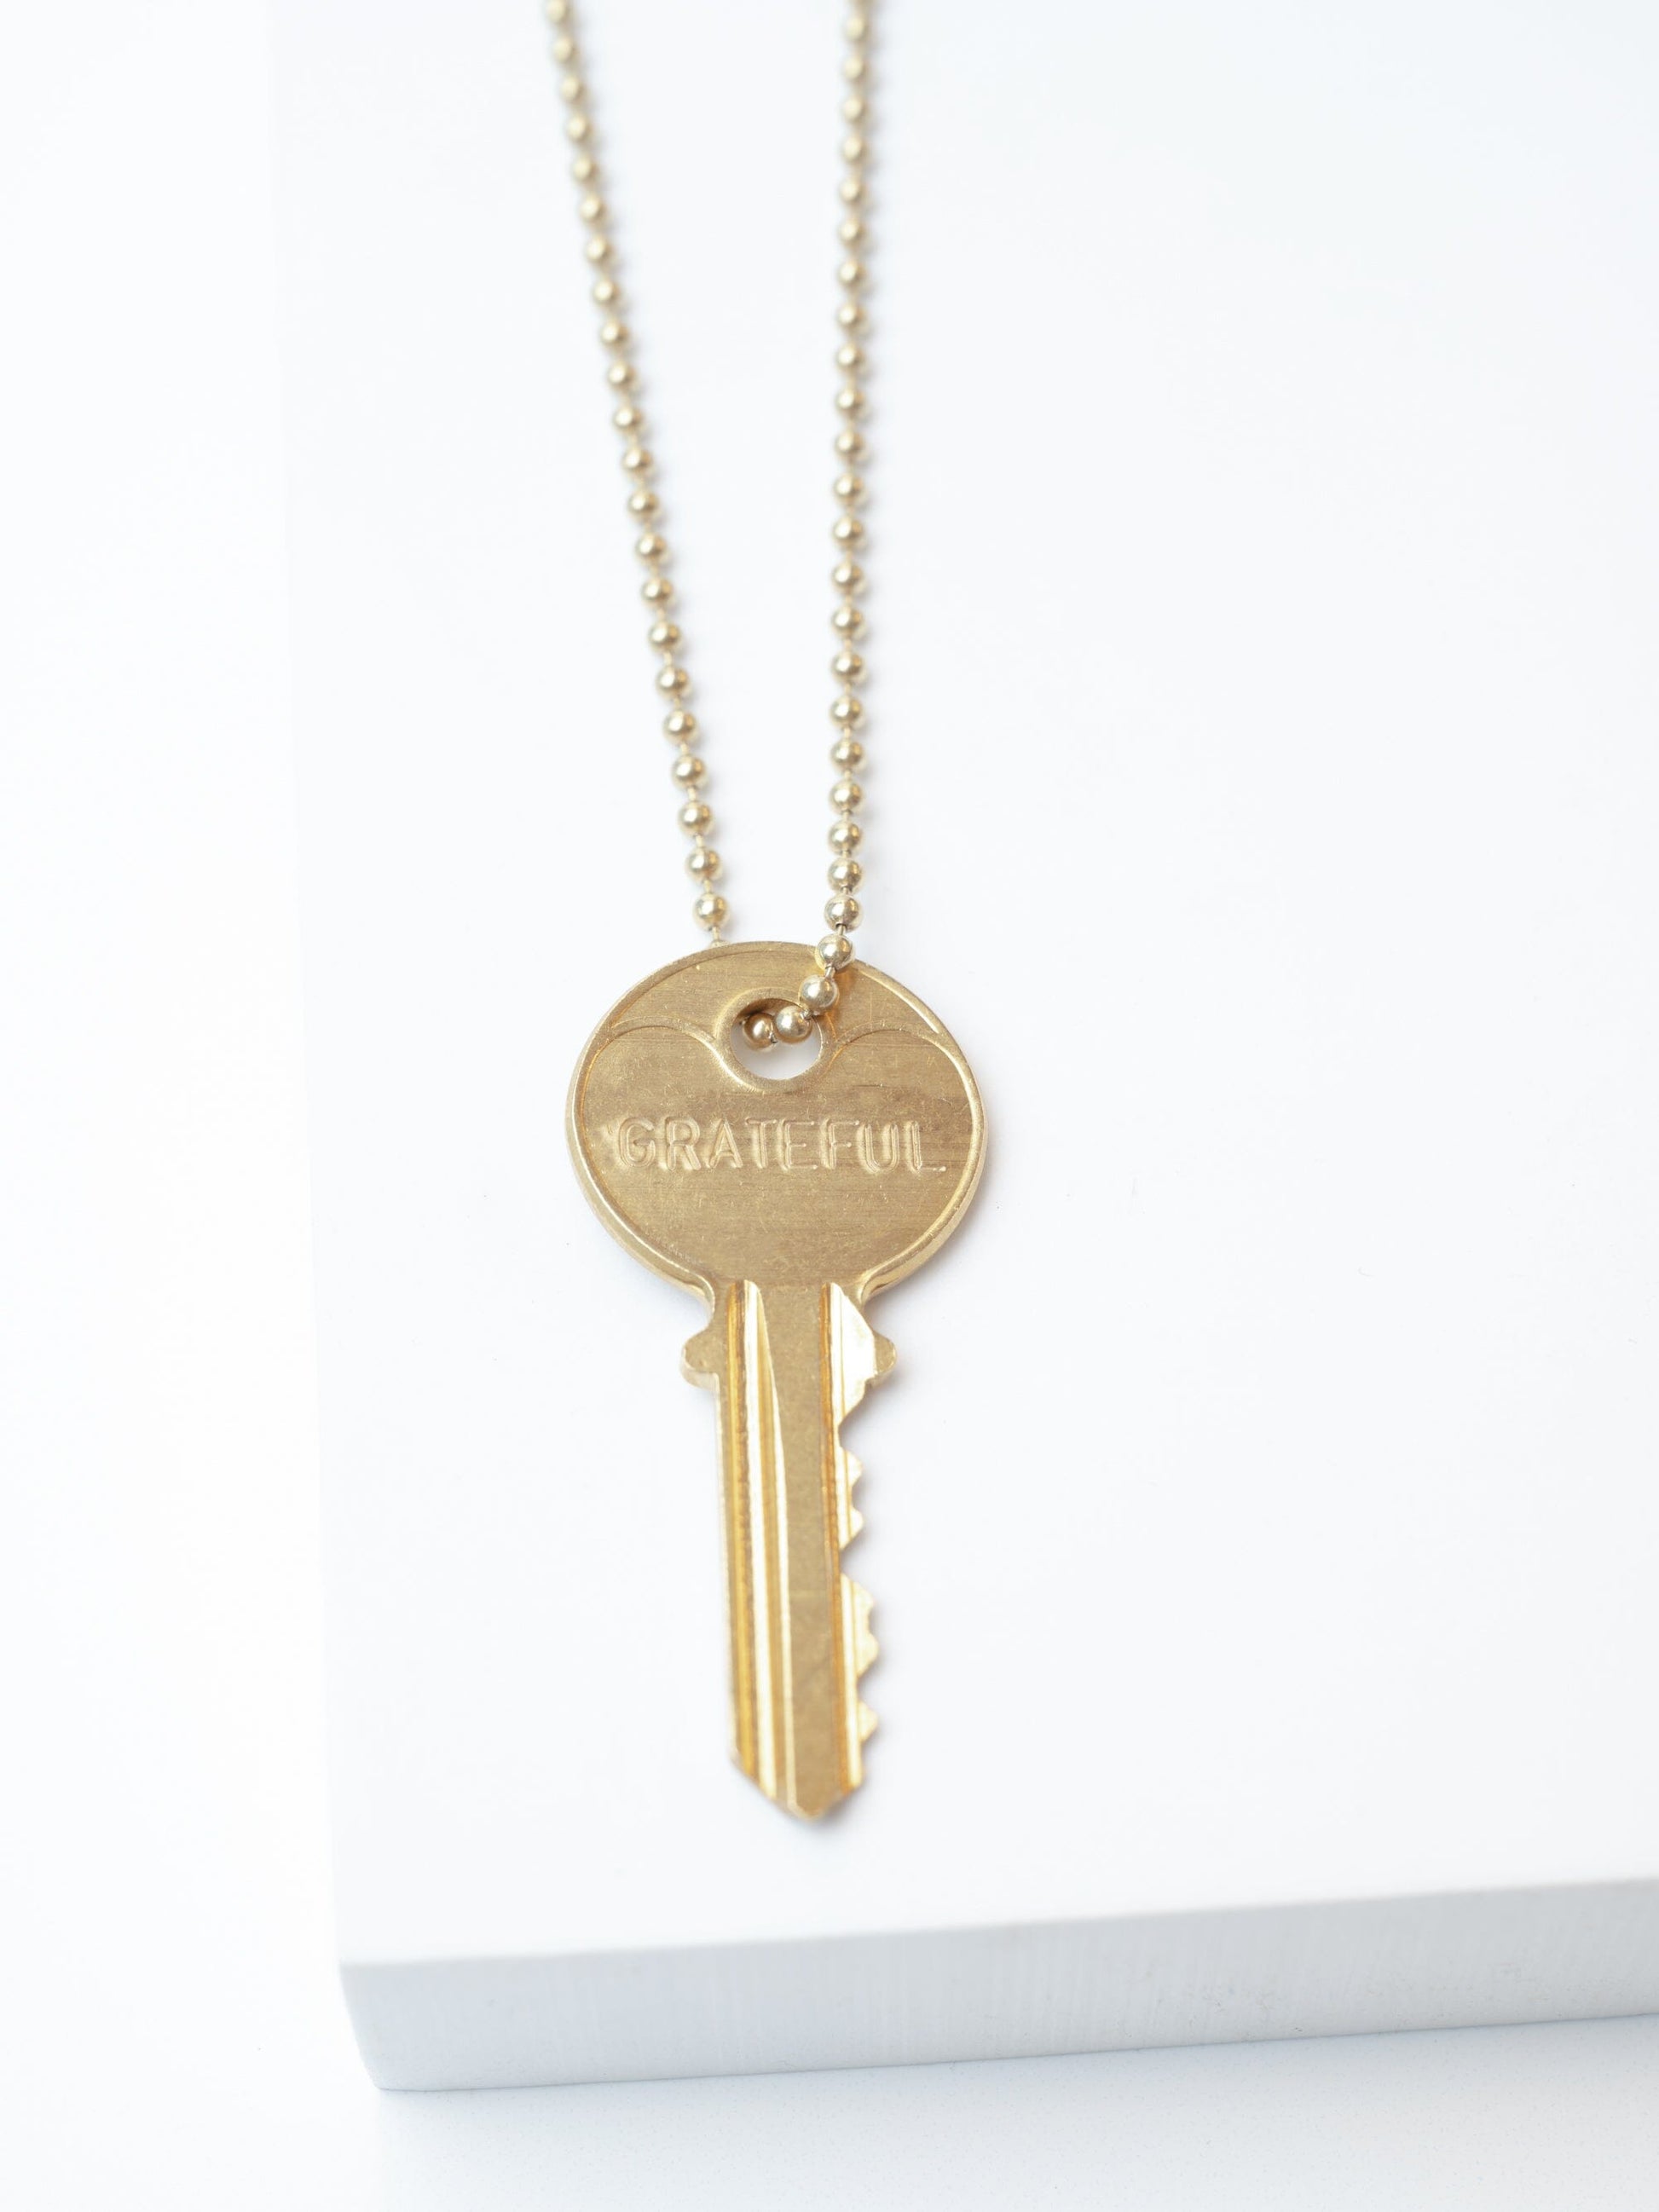 Shop Ball Chain Key Chain online - Oct 2023